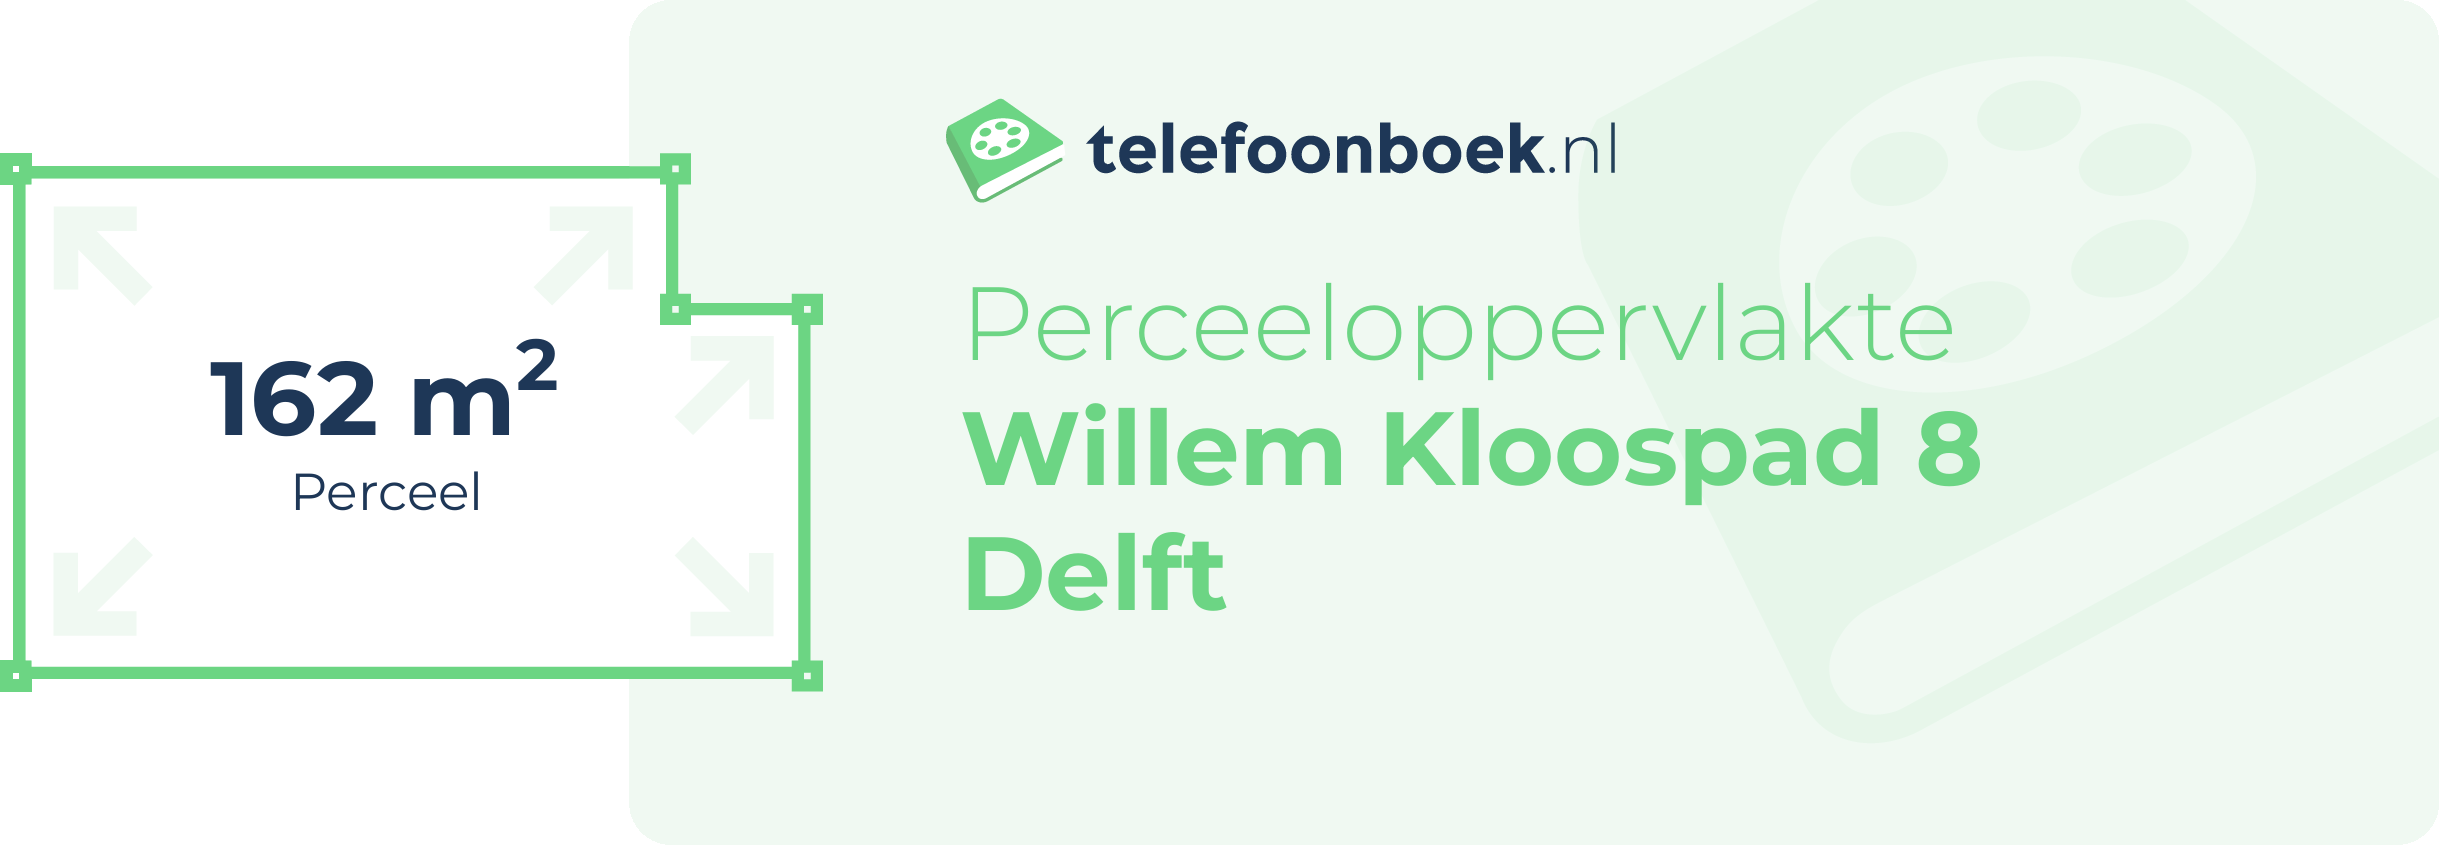 Perceeloppervlakte Willem Kloospad 8 Delft